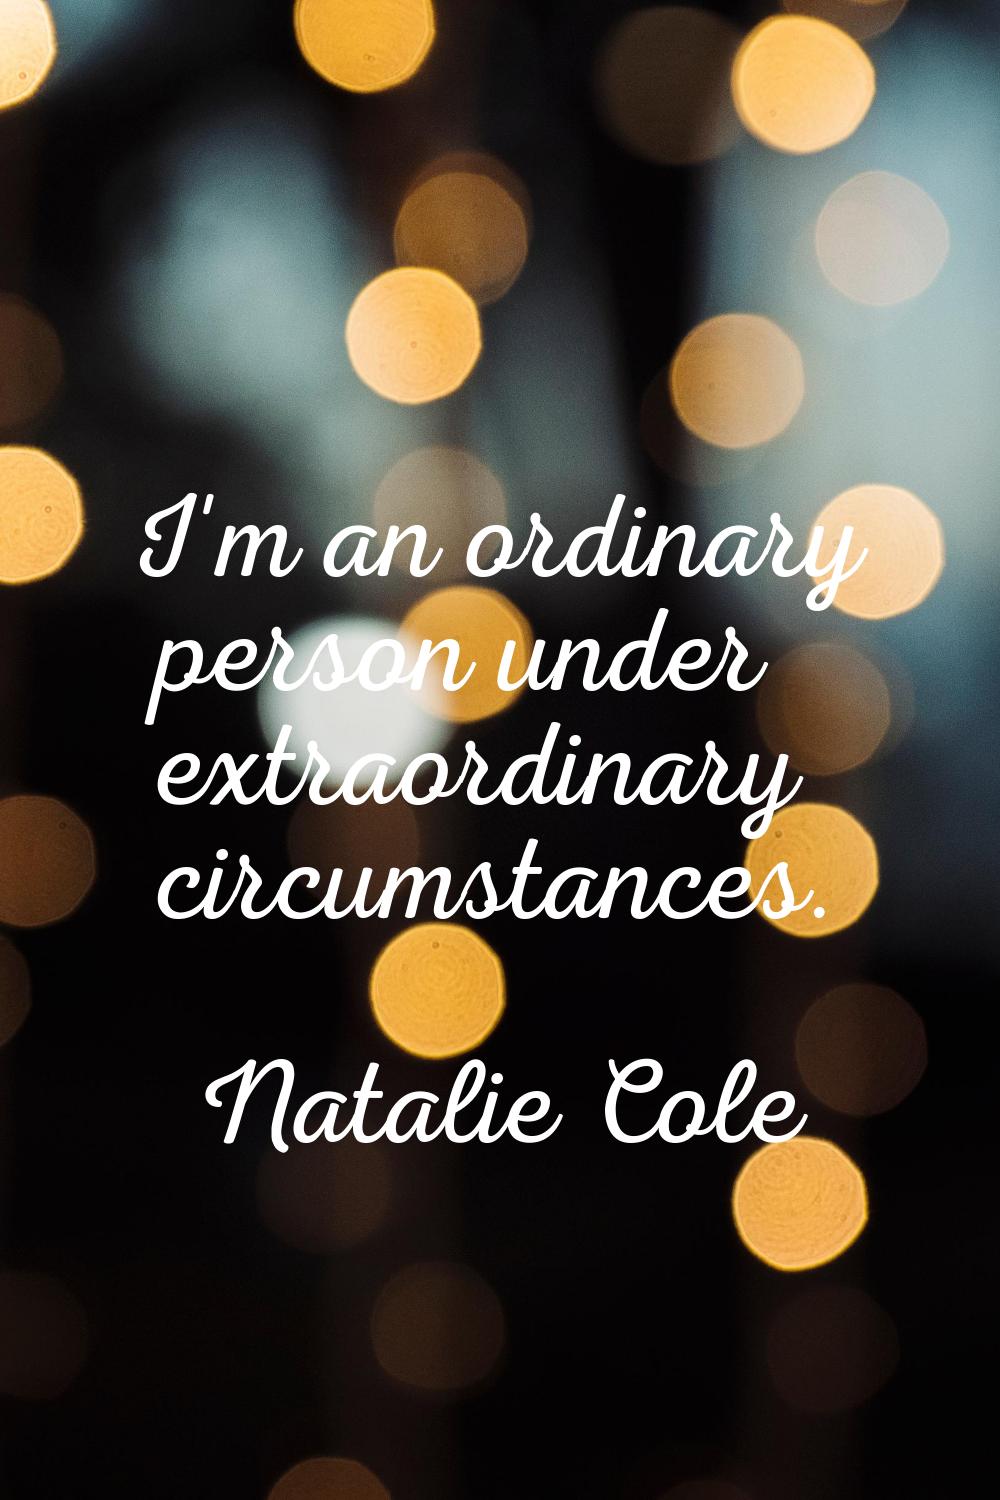 I'm an ordinary person under extraordinary circumstances.